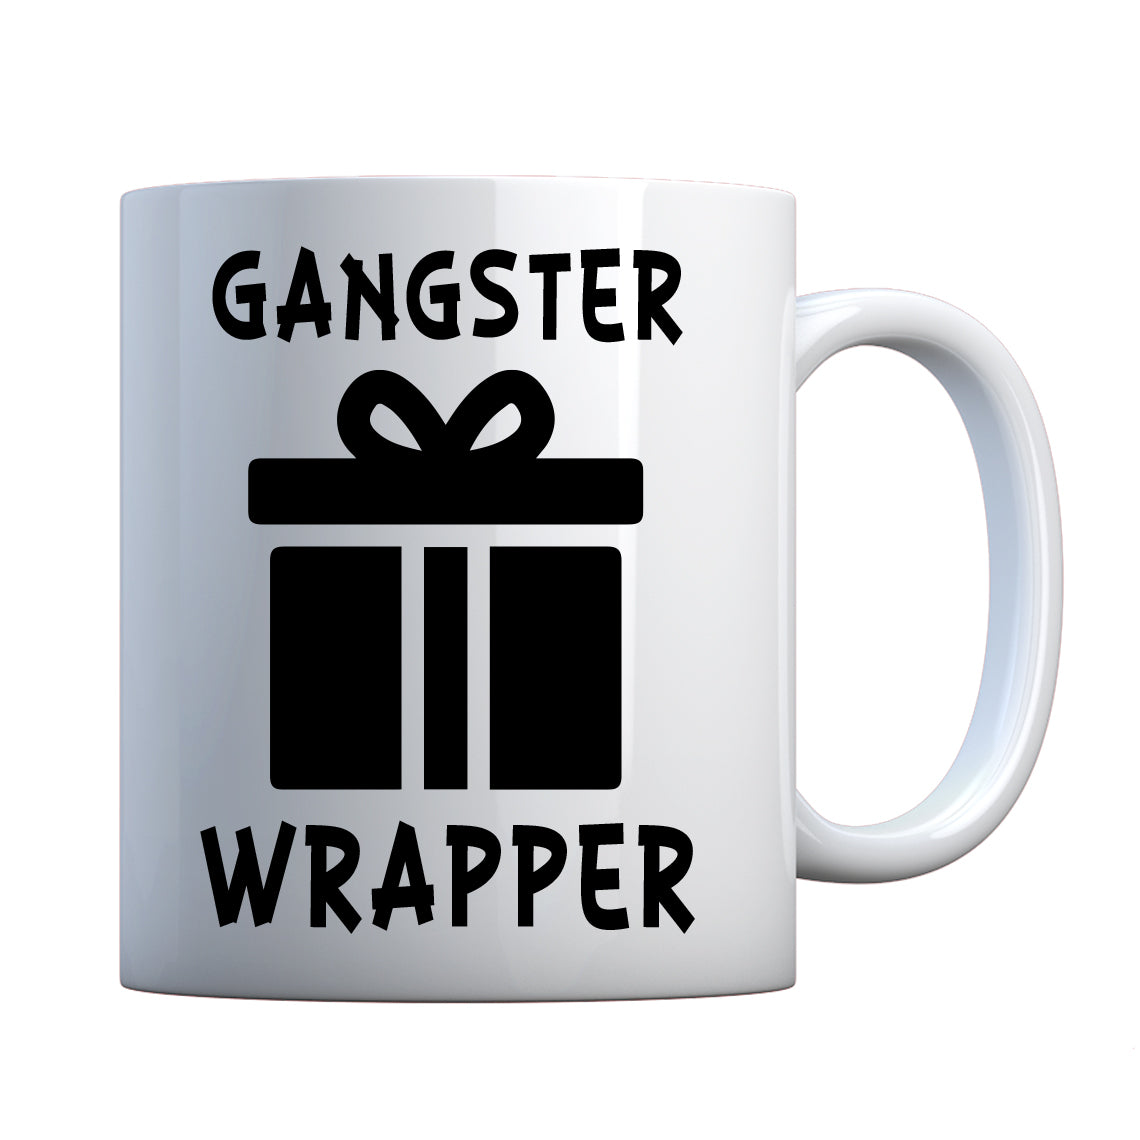 Gangster Wrapper Ceramic Gift Mug